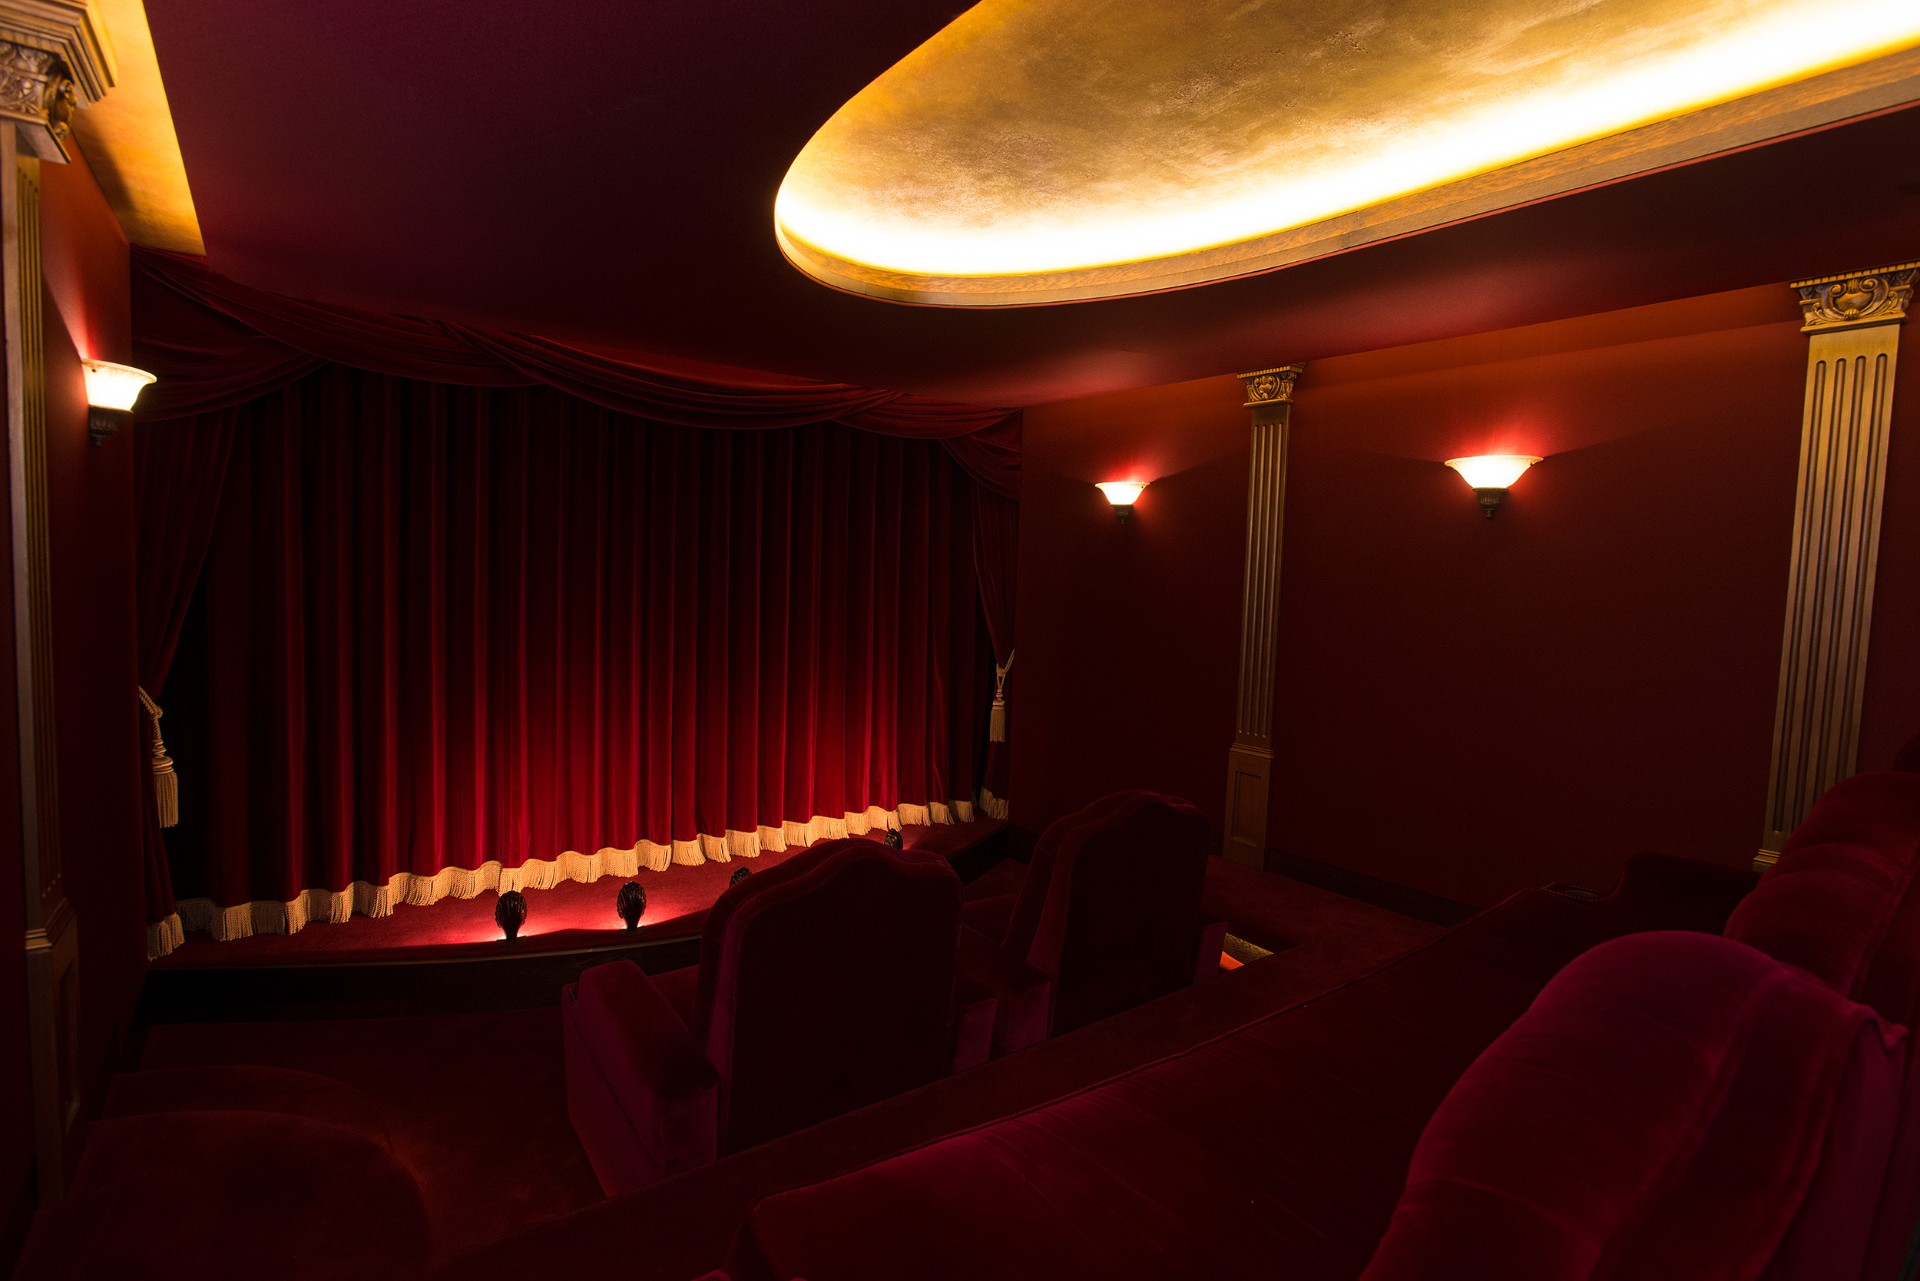  Vintage-style Home Cinema wins European Award Image